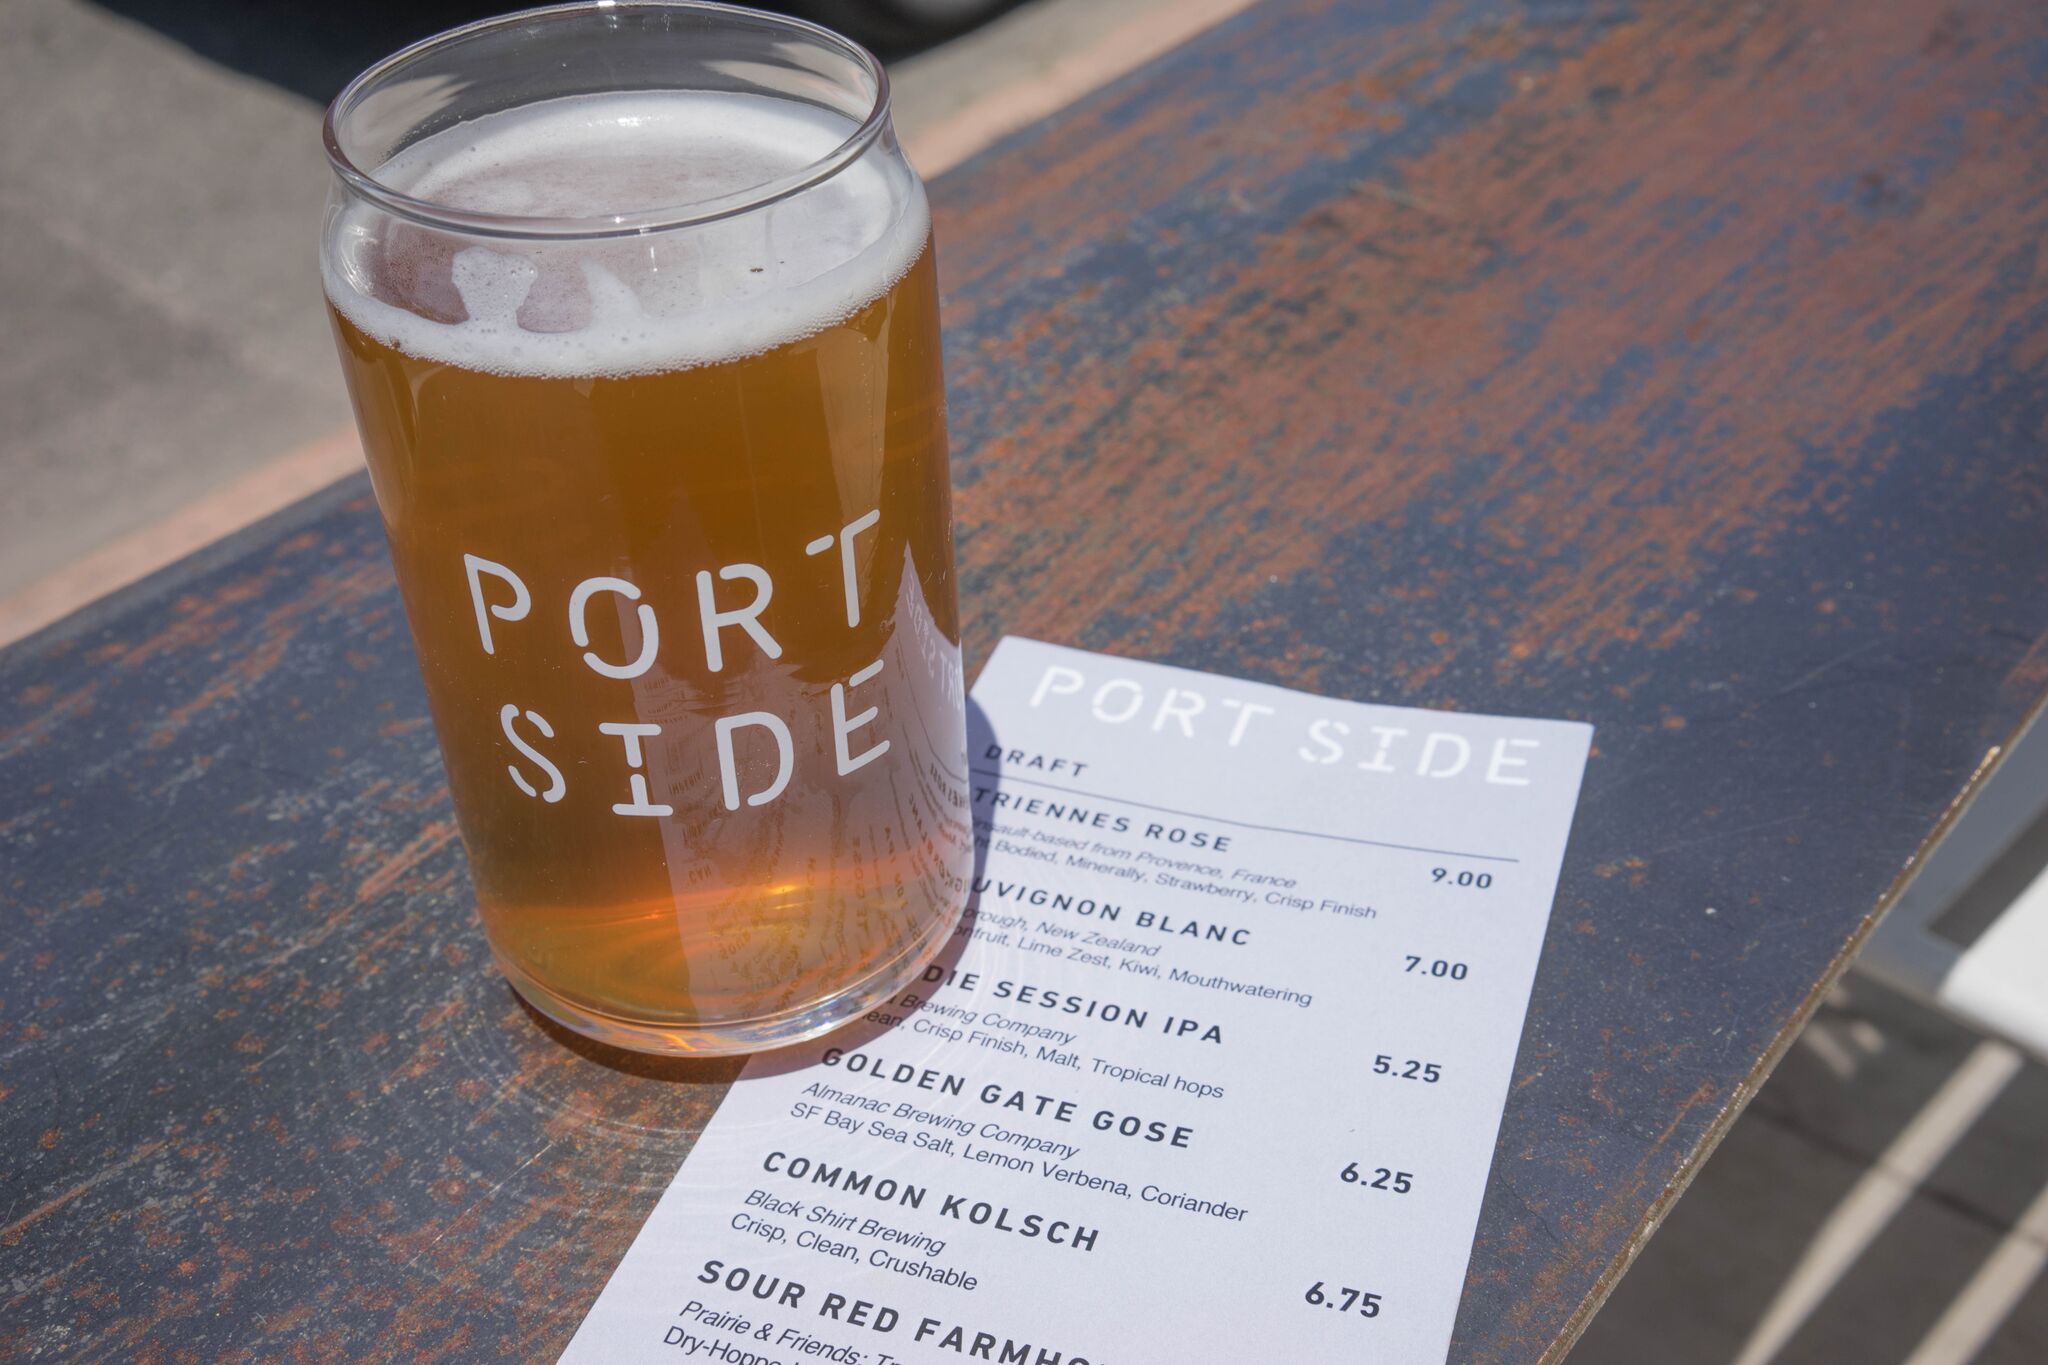 Draft beer and drink menu at Port Side.